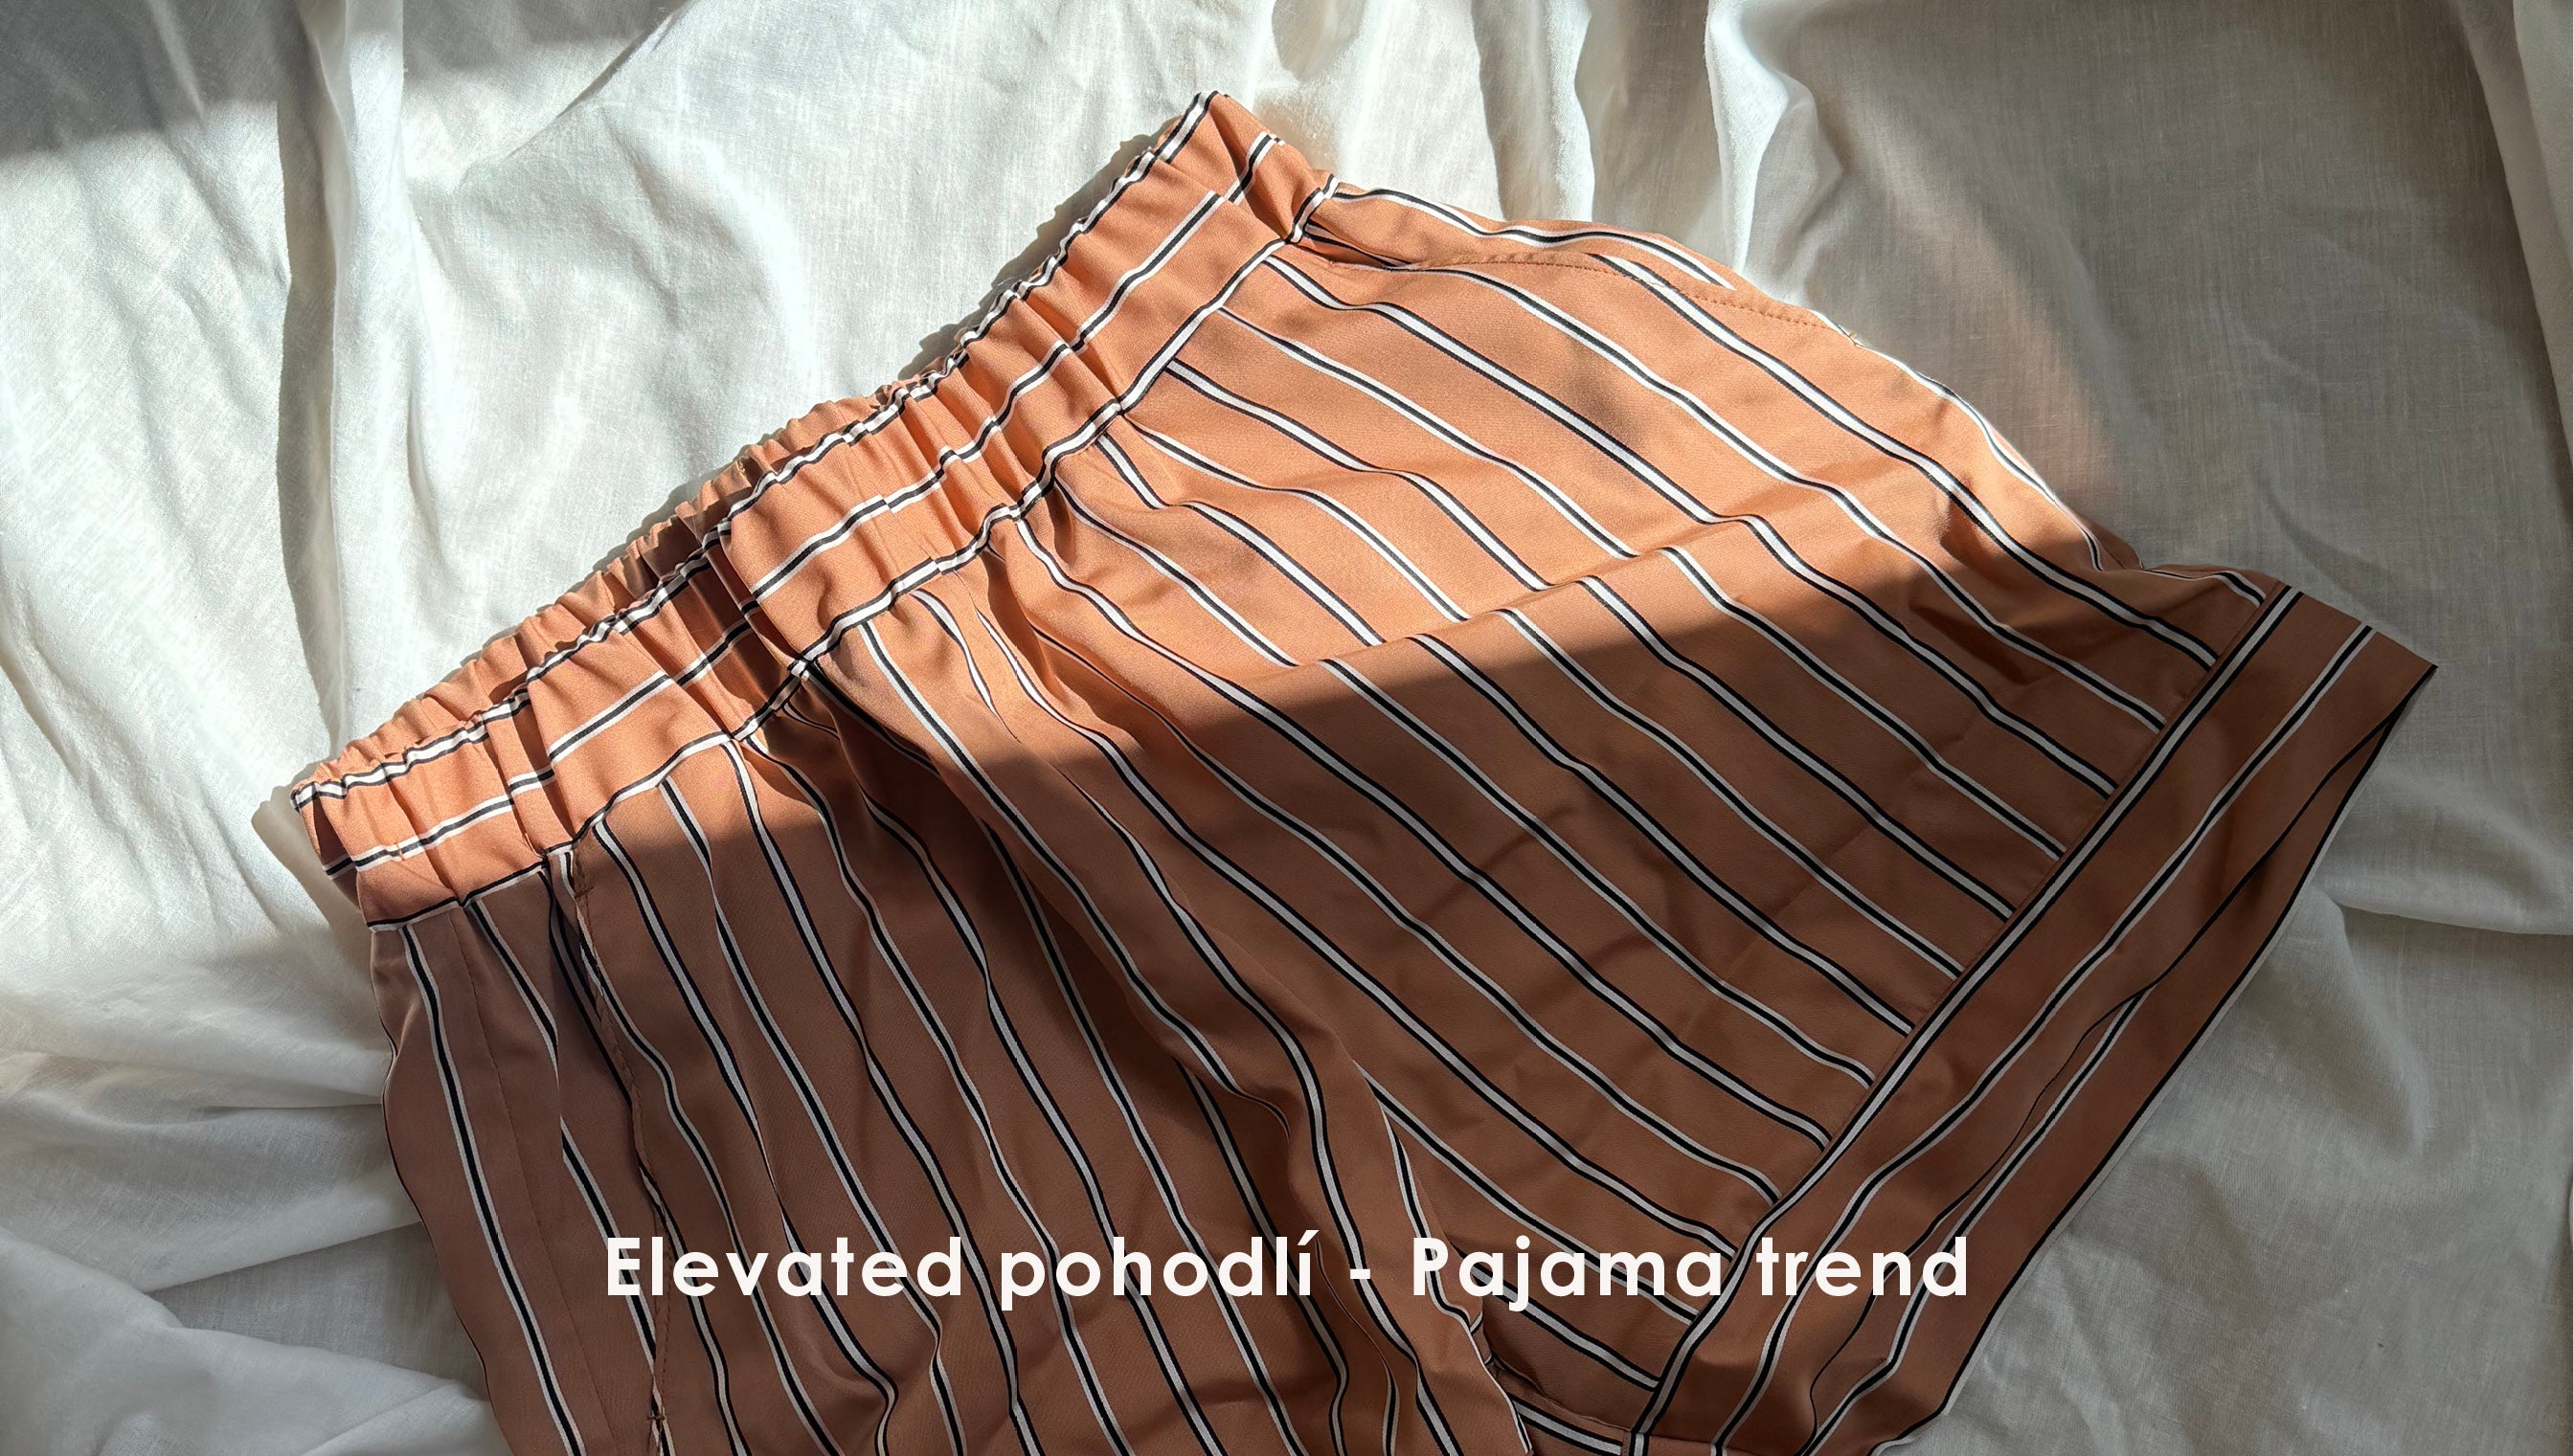 Pyžamový trend: Elevated pohodlí